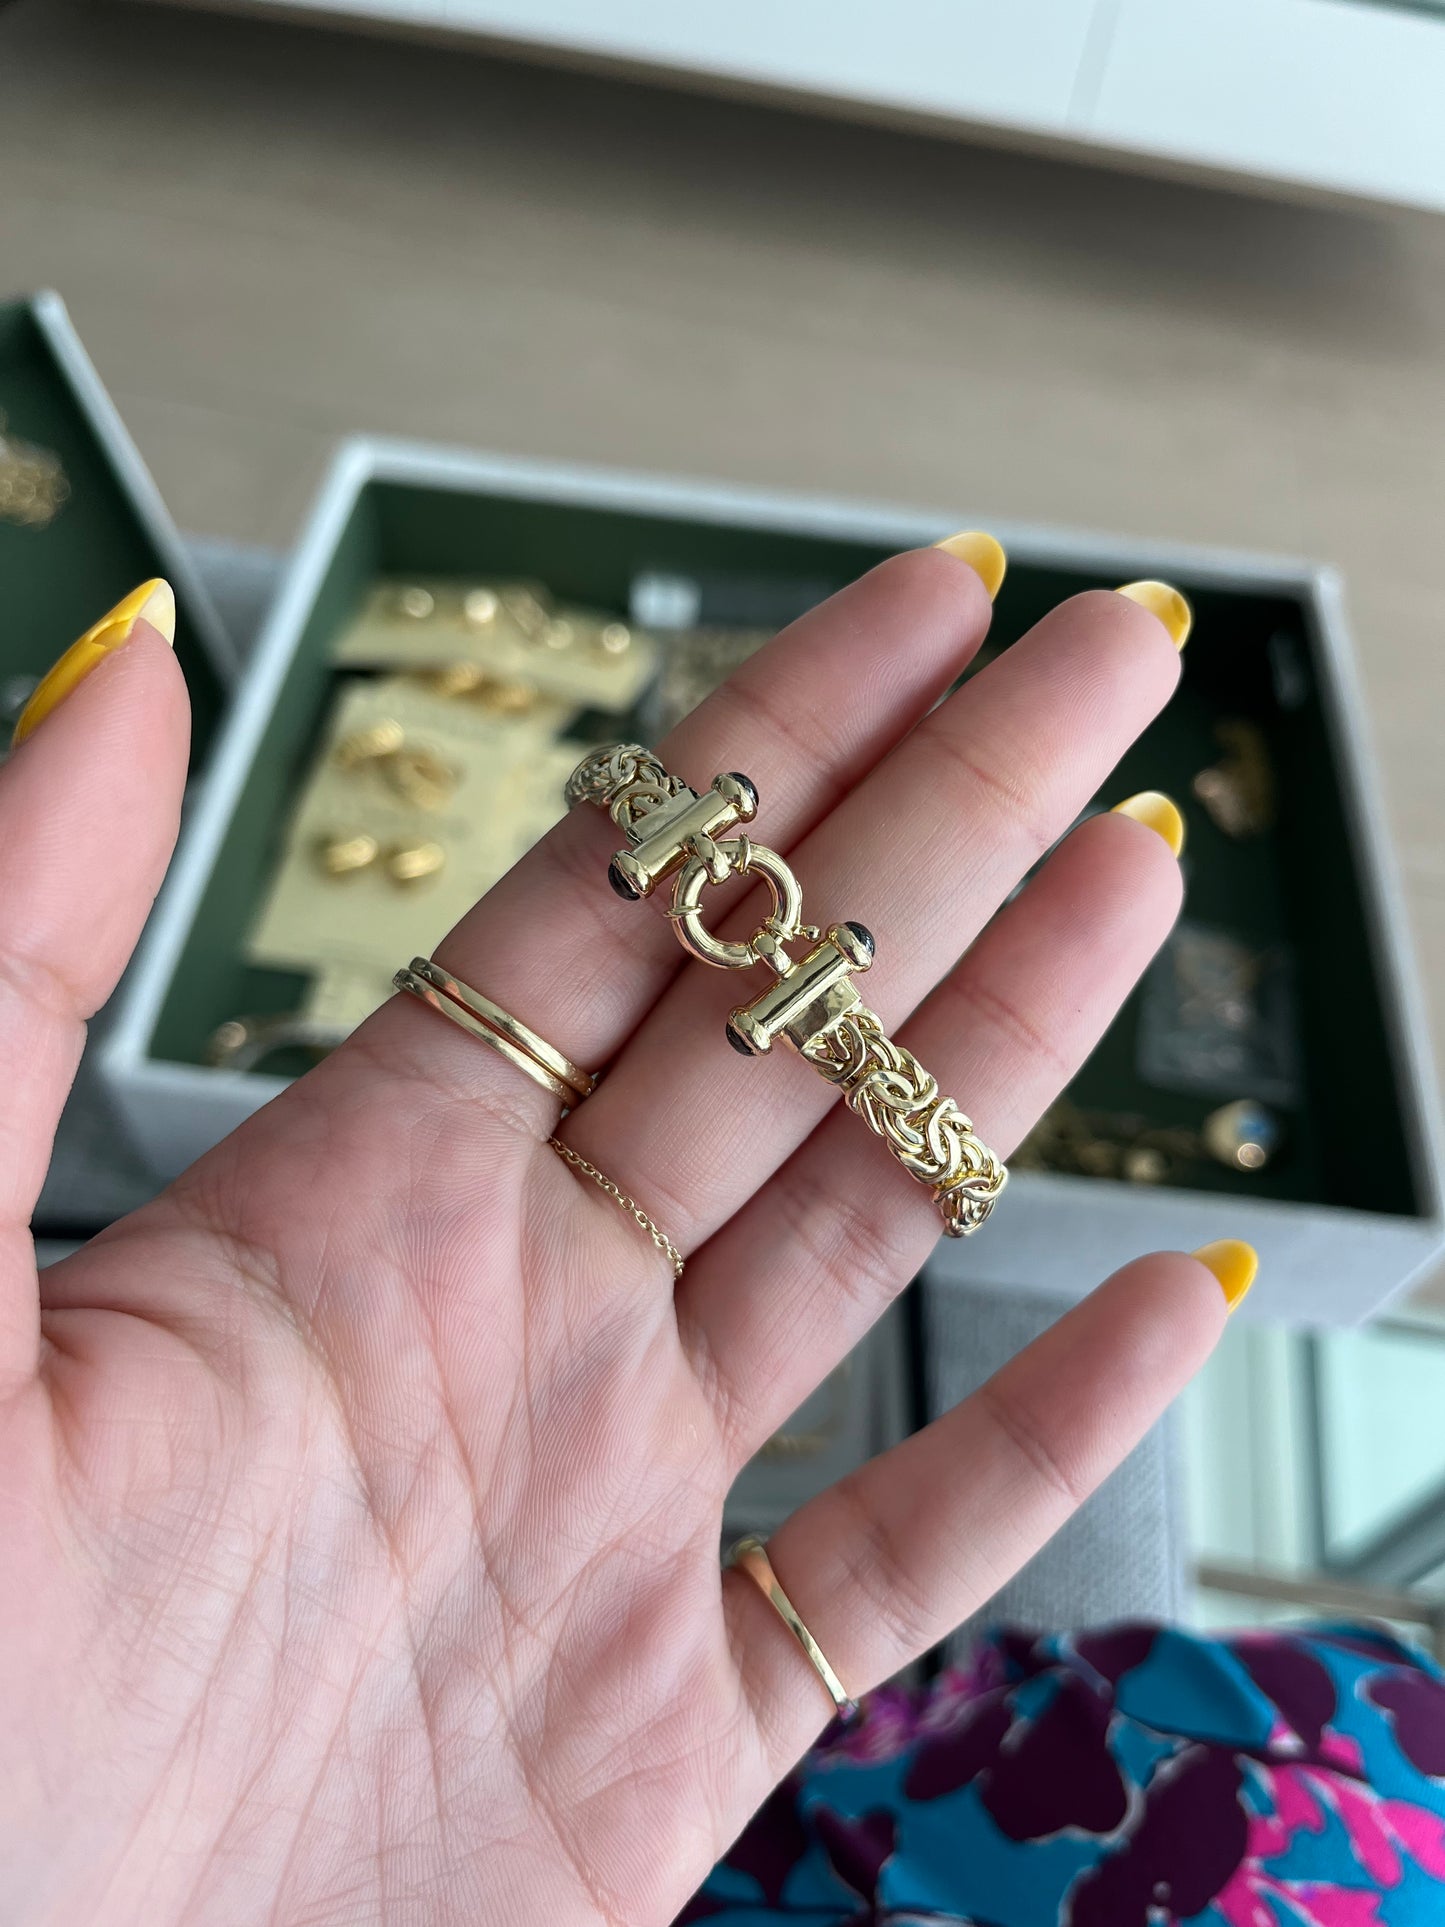 14kt Yellow Gold Byzantine Bracelet